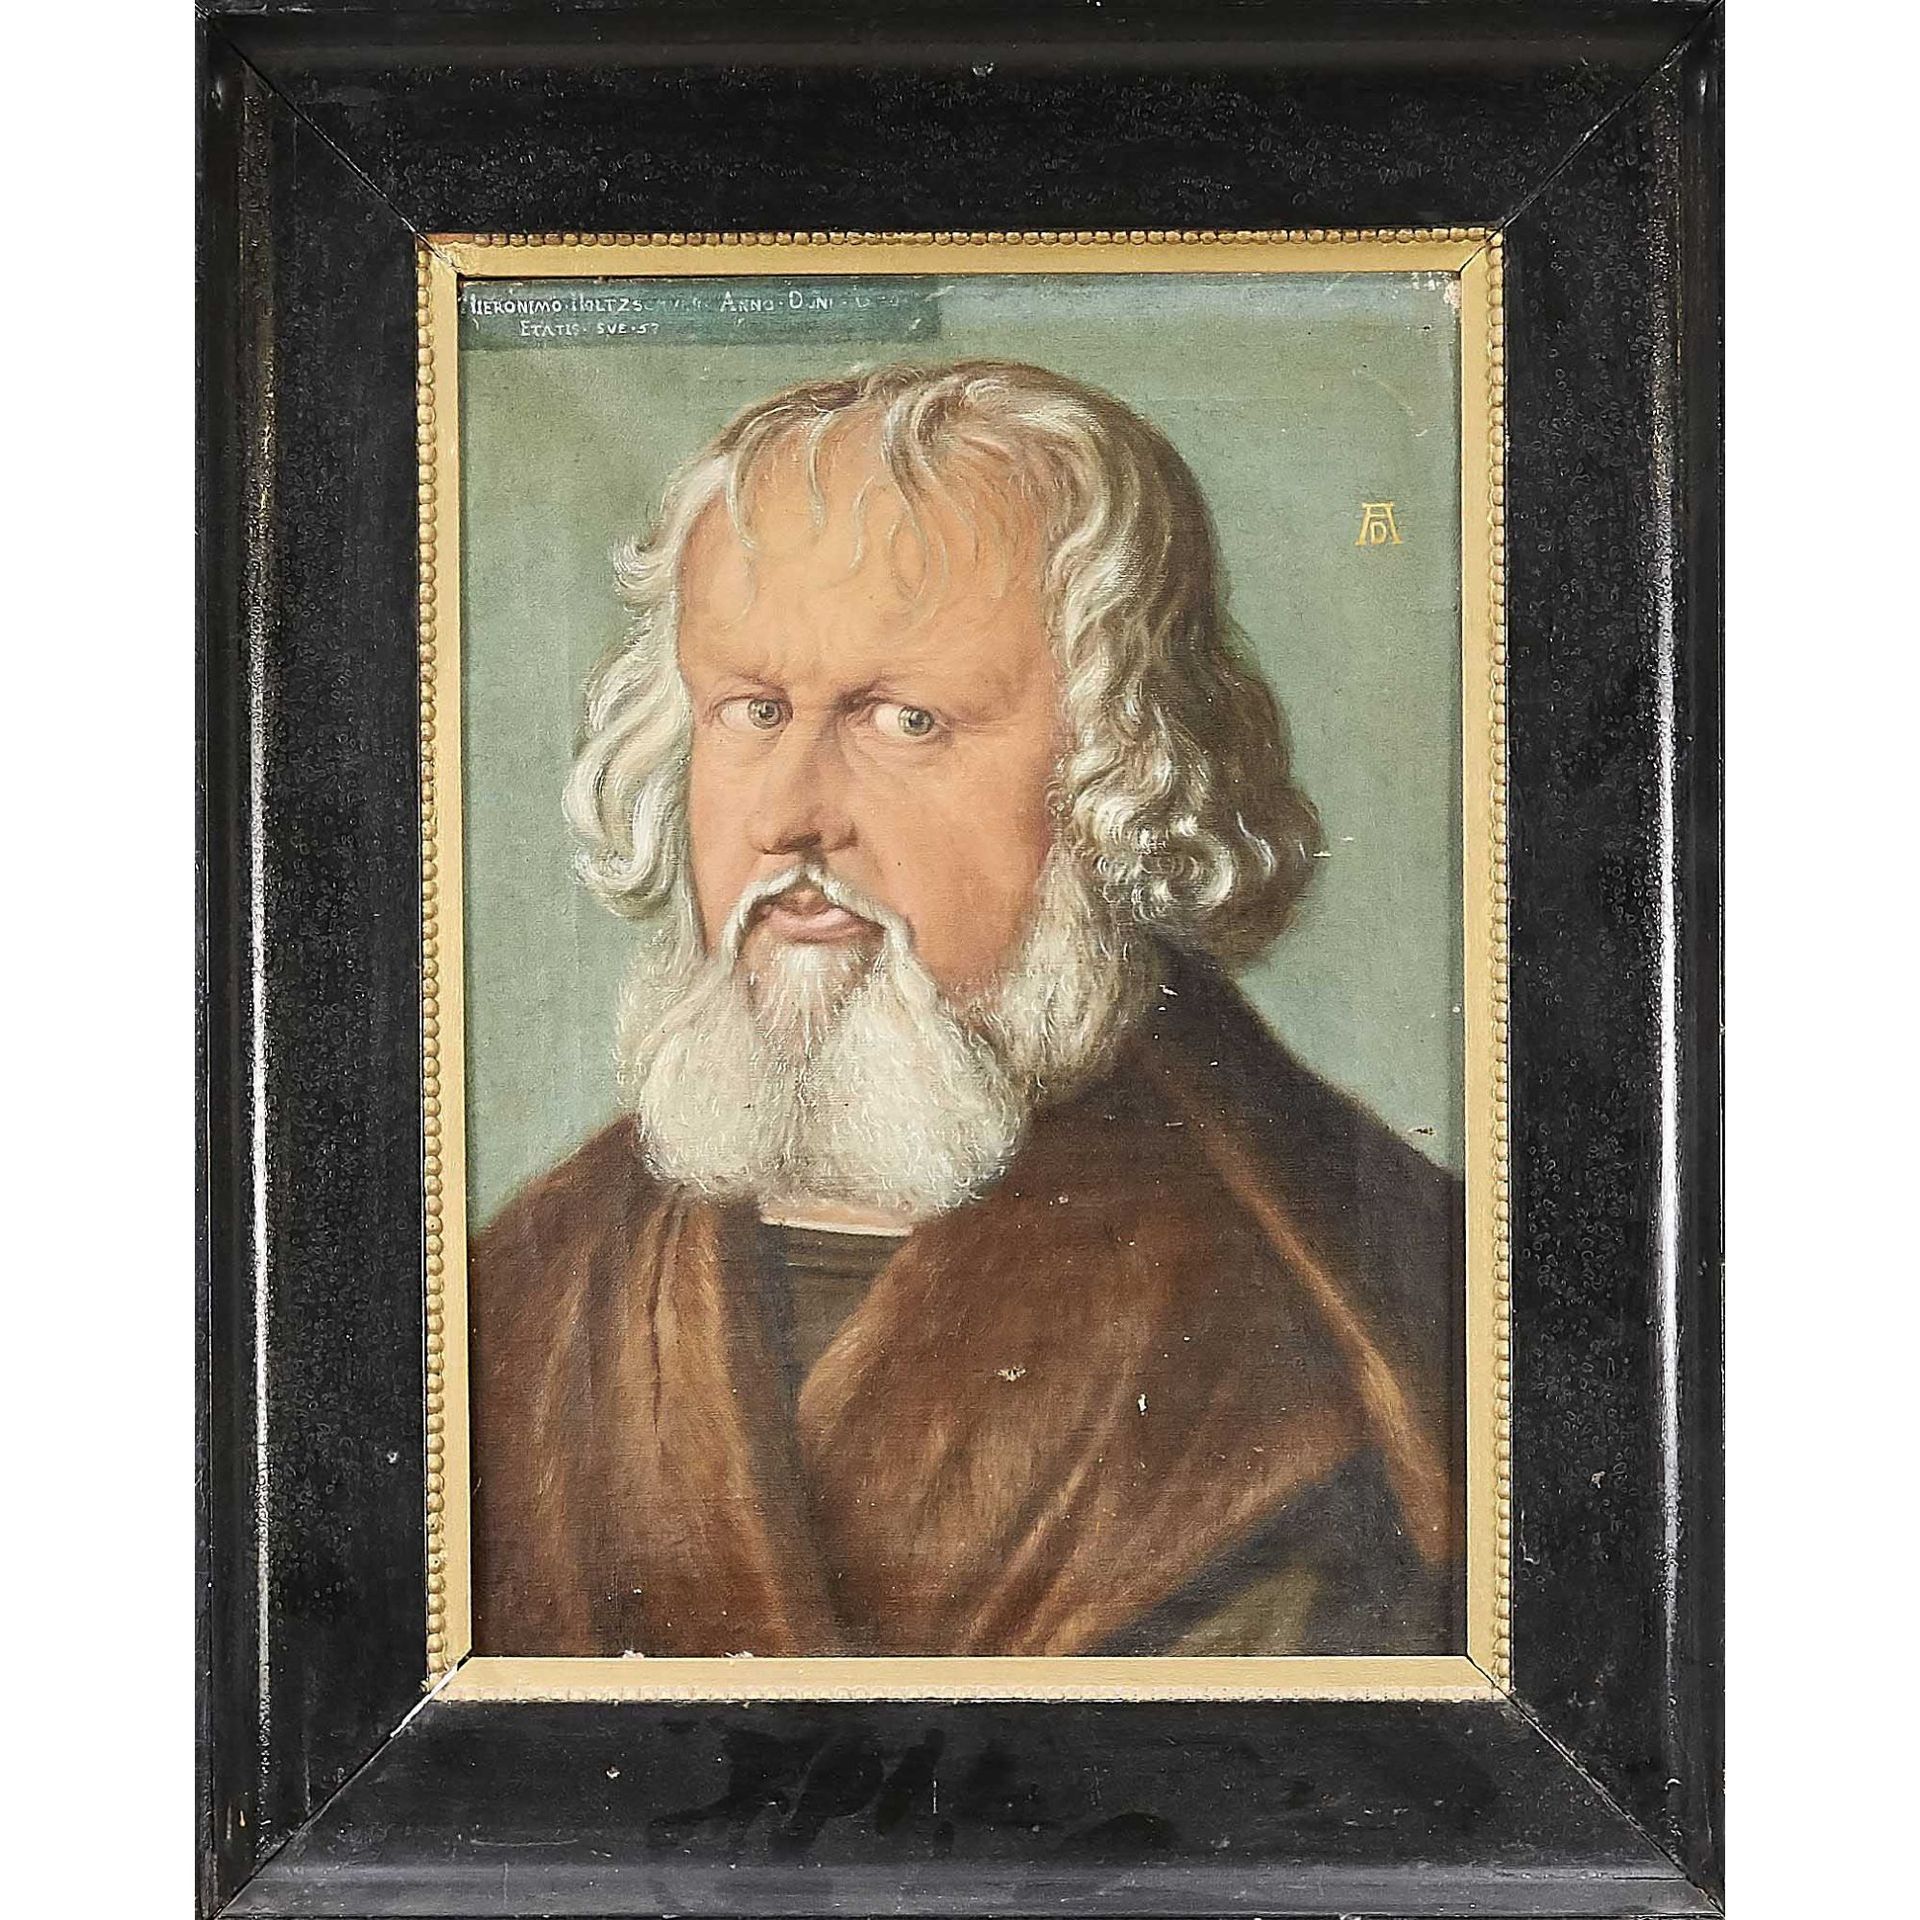 Null 阿尔布雷希特-丢勒（1471-1528），"'Hieronymus Holzschuher'"之后，纽伦堡贵族的肖像，约1900年由匿名抄写者创作，布&hellip;